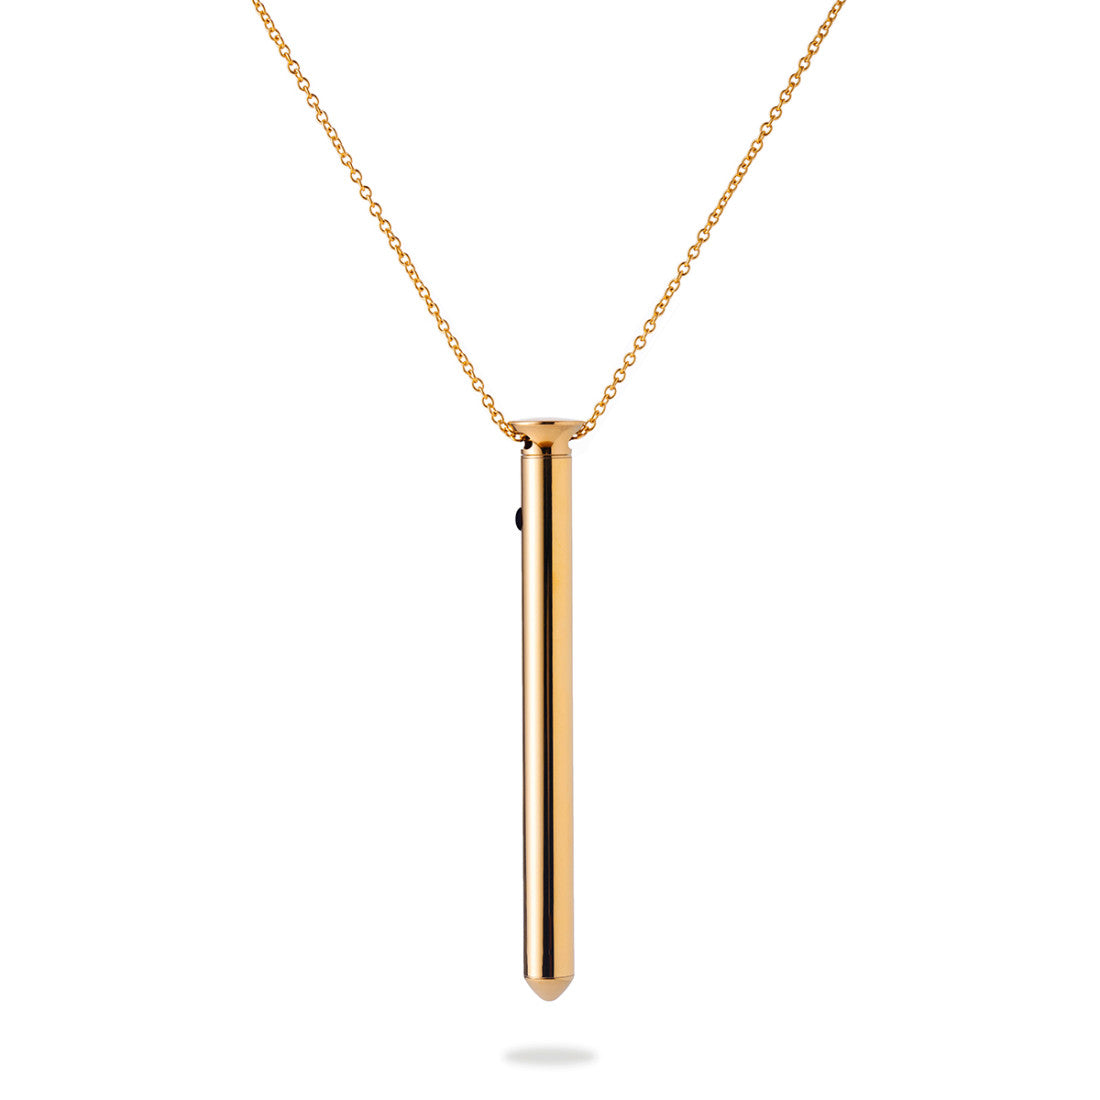 Crave Vesper Vibrator Necklace | 24k Gold